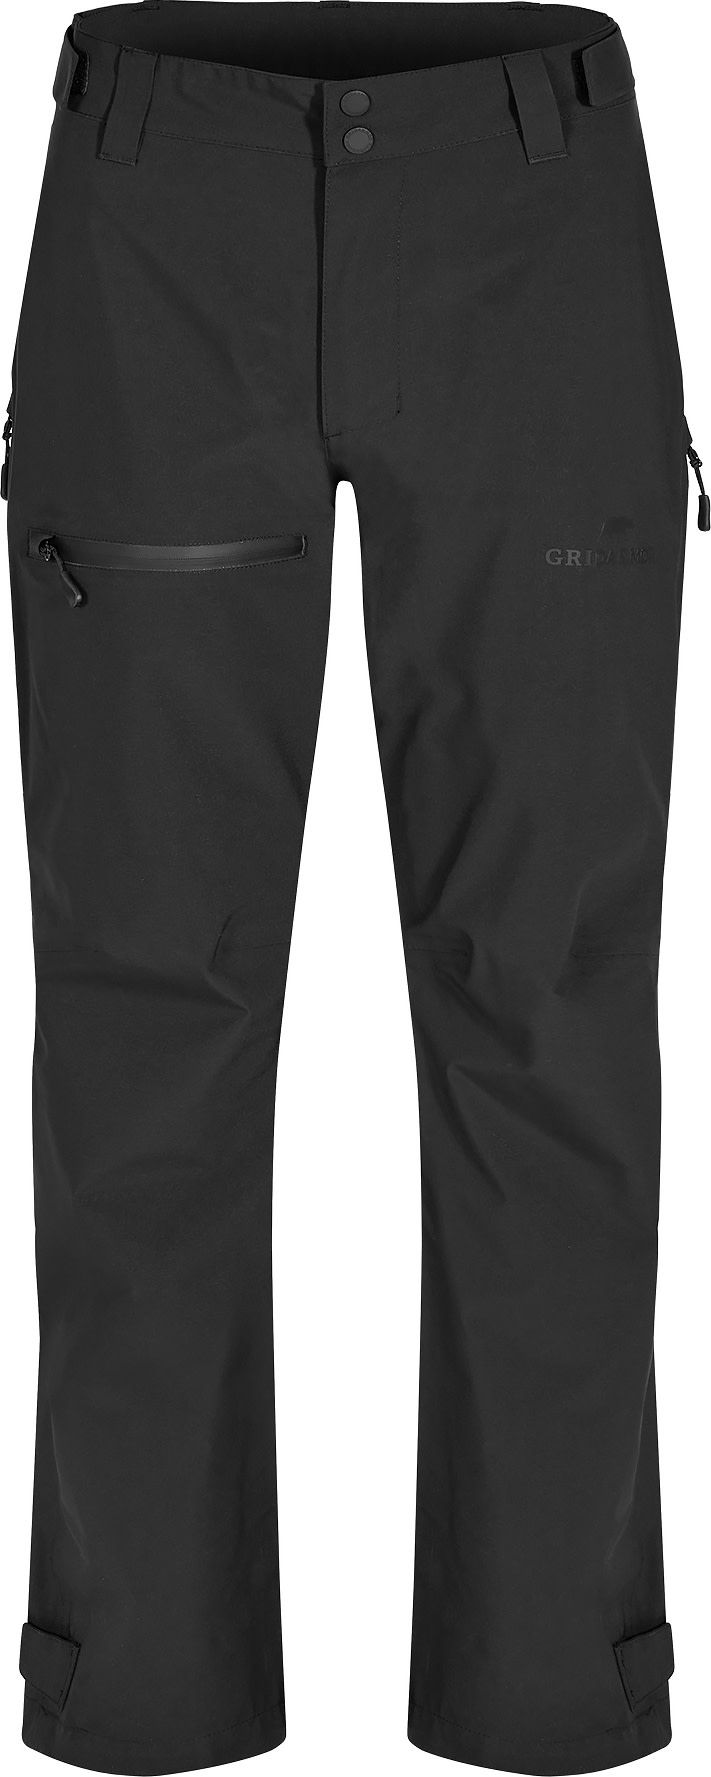 Kvisla 3L Pants Women's Jet Black Gridarmor